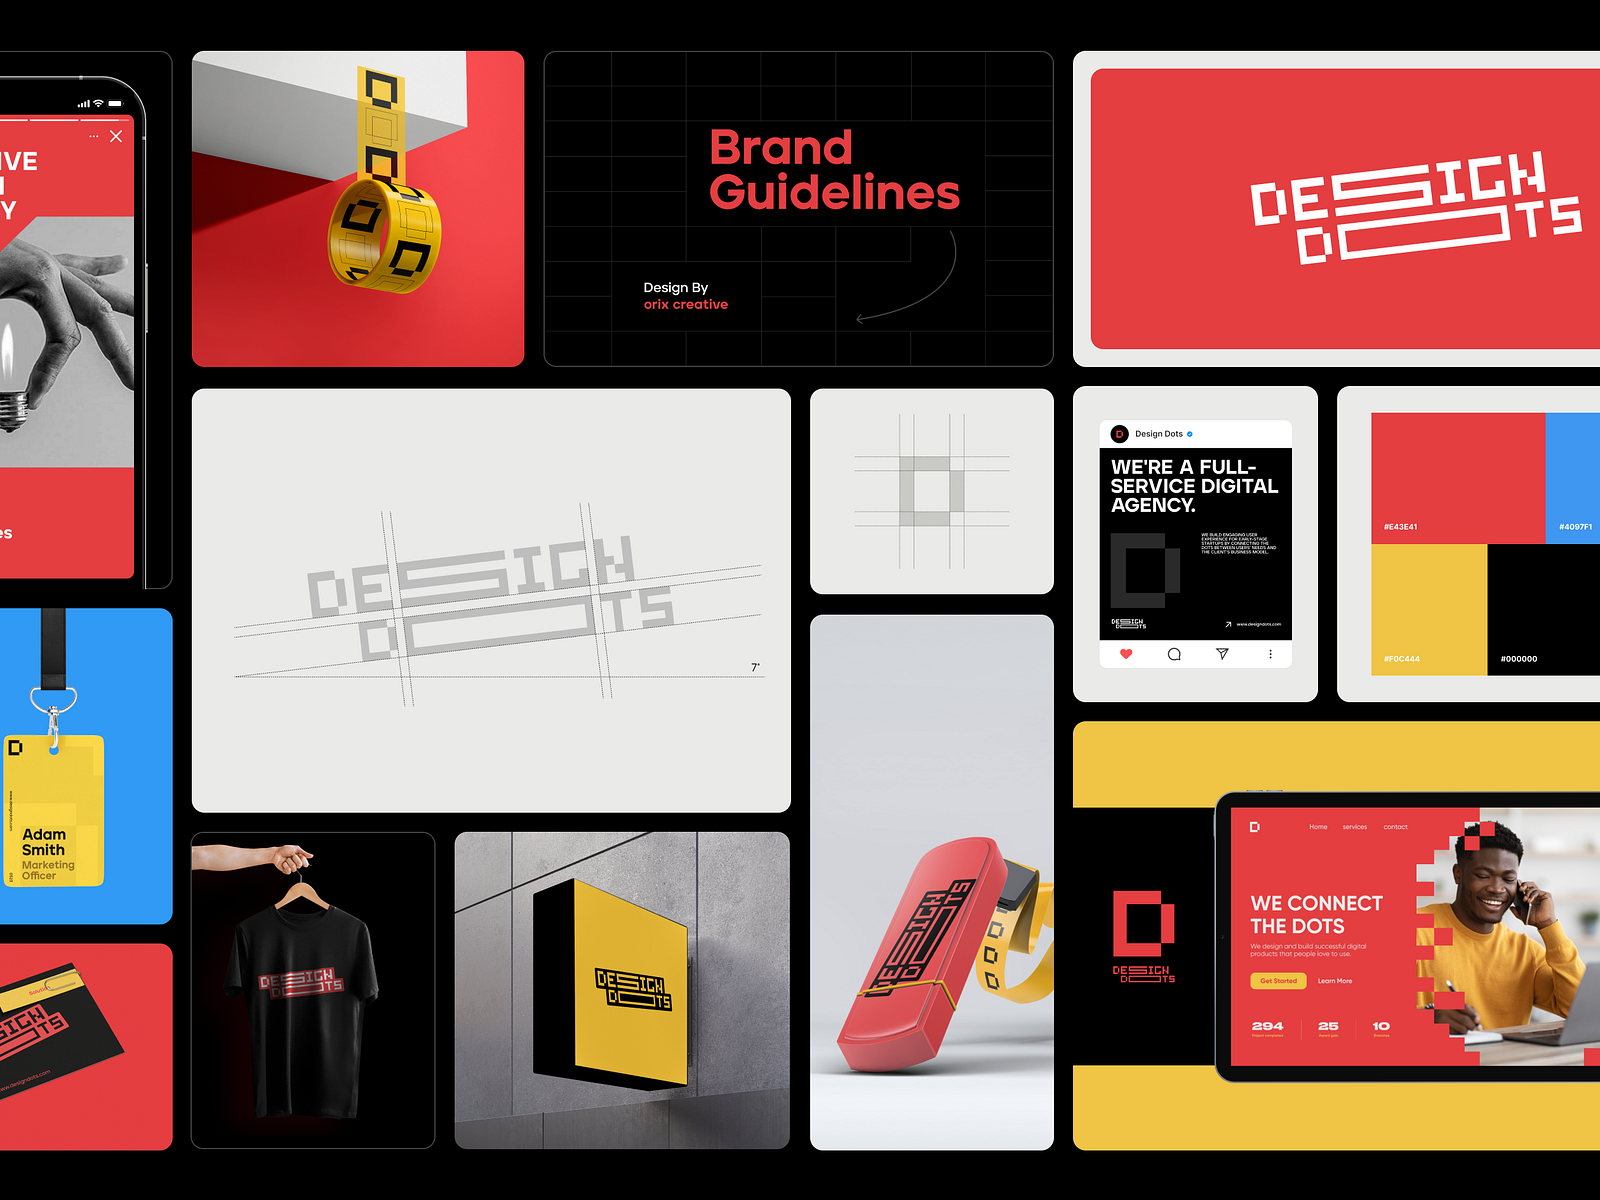 25 Creative Examples Of Branding, Visual Identity and Logo Designs  Logo  inspiration branding, Visual identity design, Association logo design